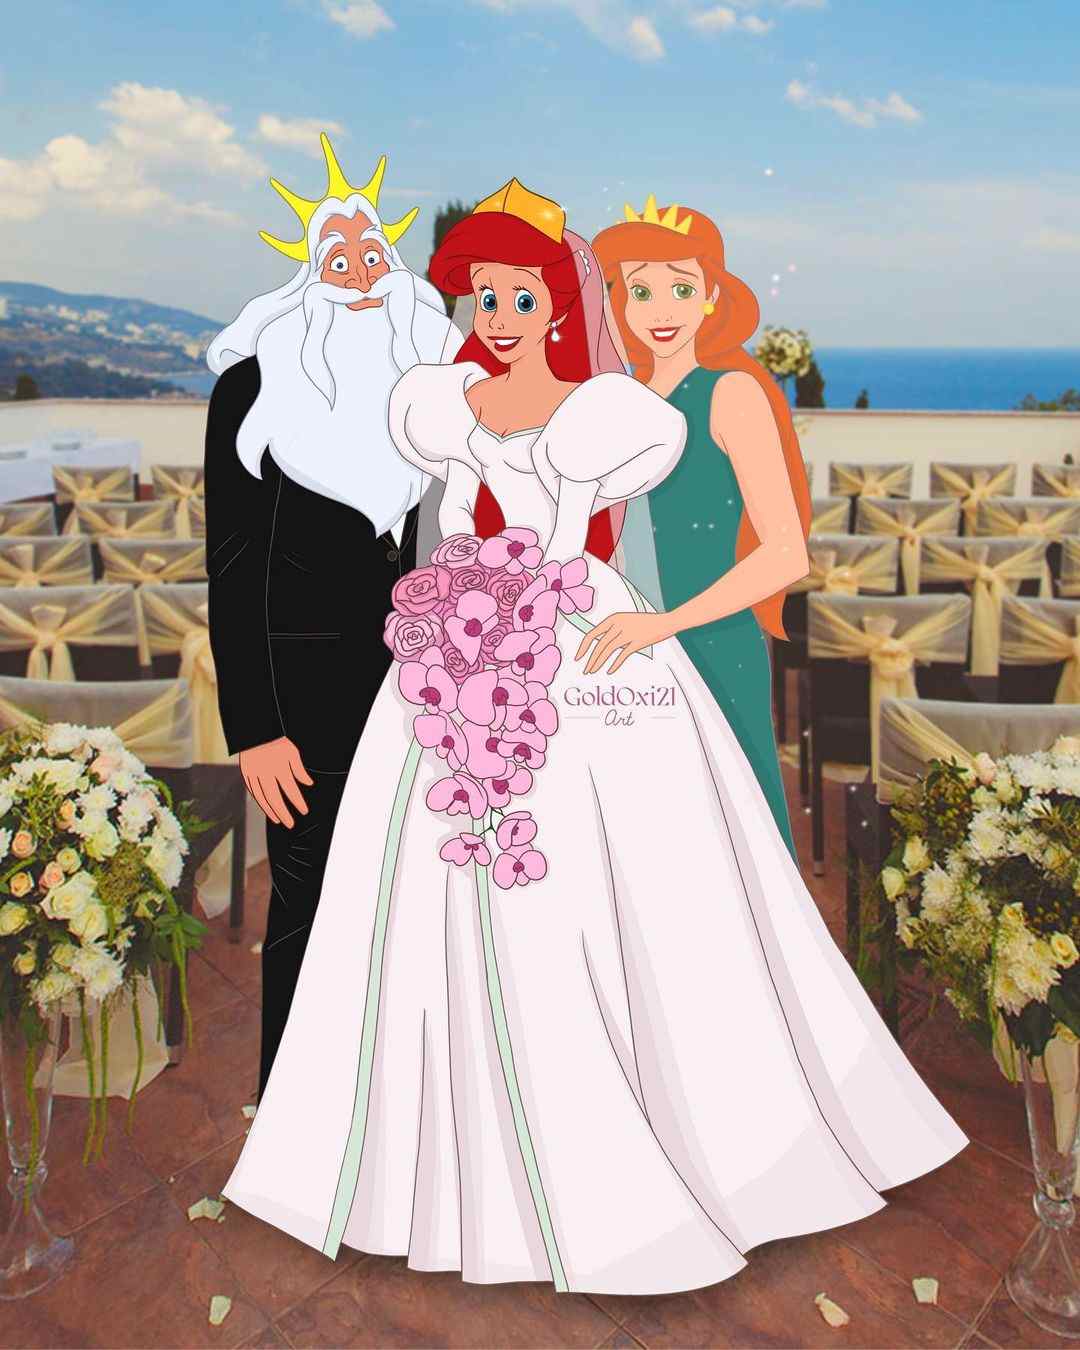 keluarga princess 8 - Harmonis, 10 Potret Pernikahan Princess Disney Bersama Kedua Orangtuanya